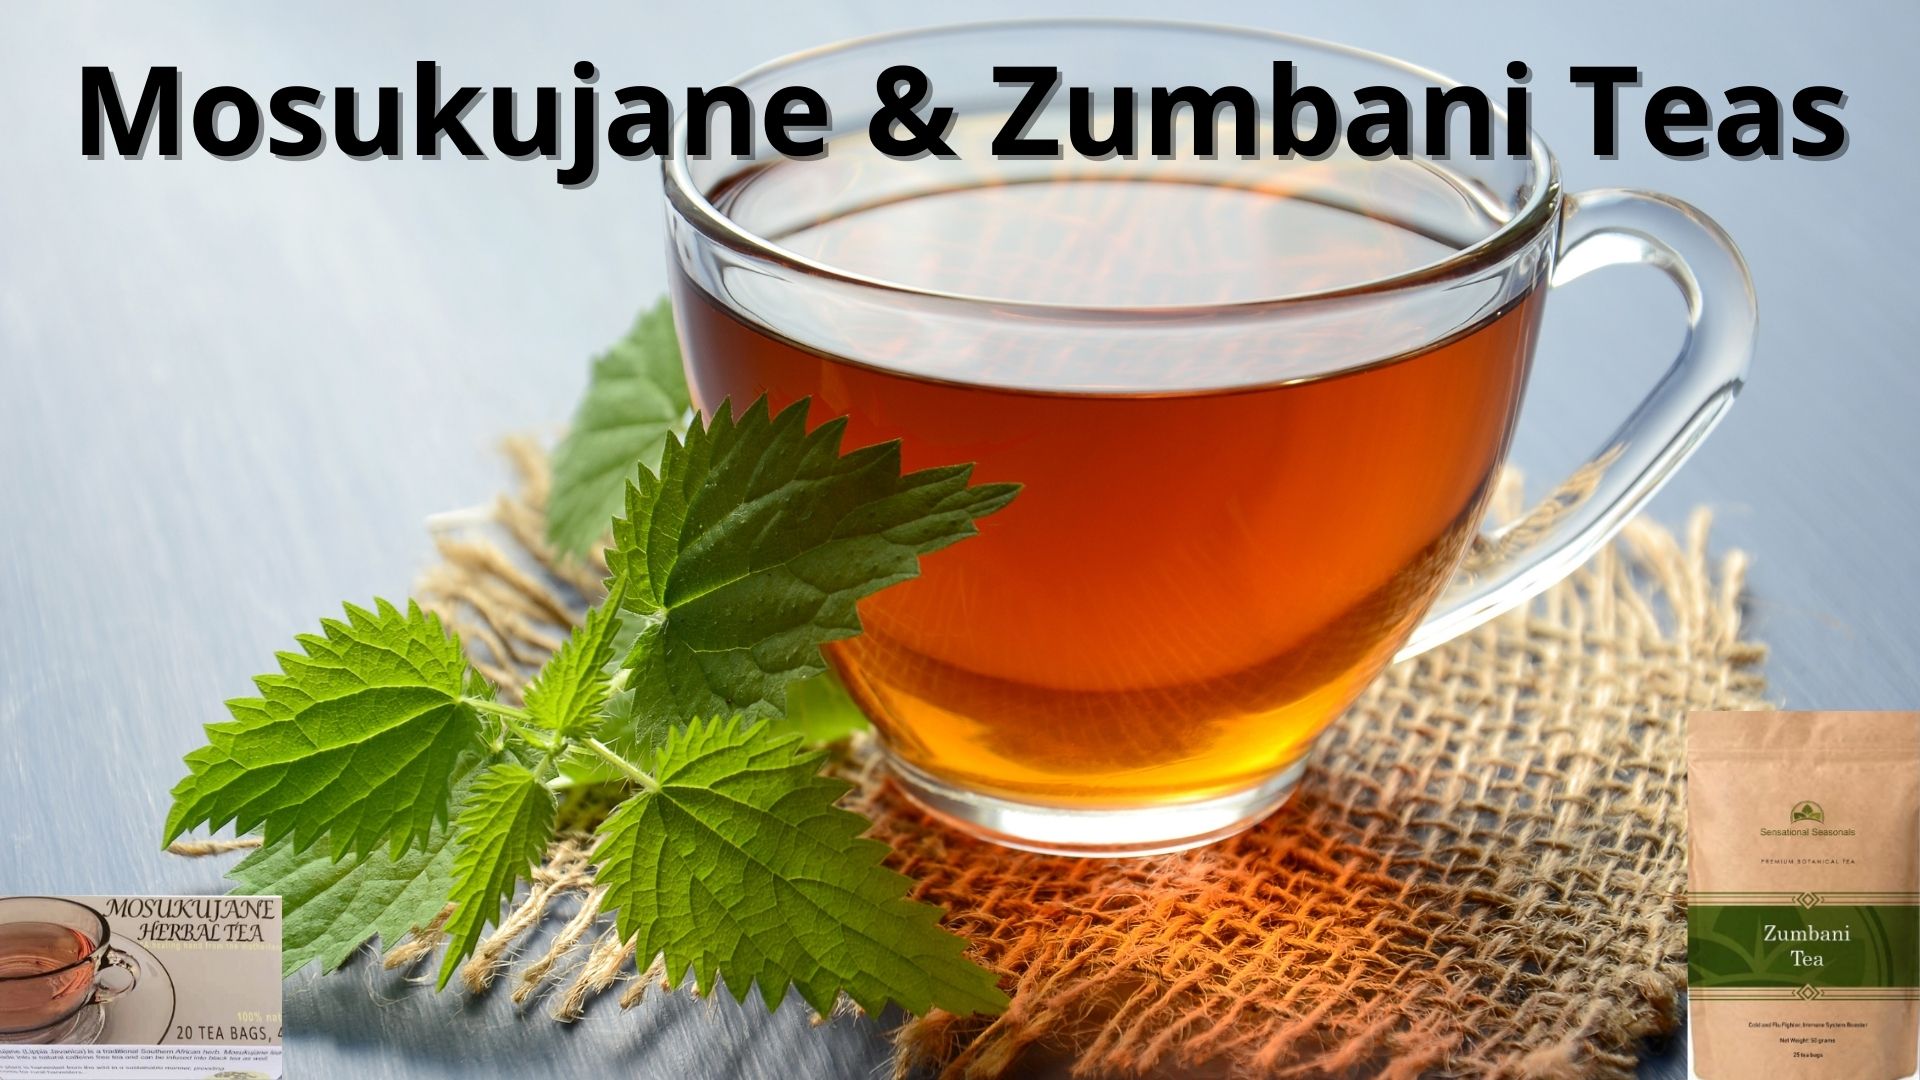 Mosukujane & Zumbani Teas